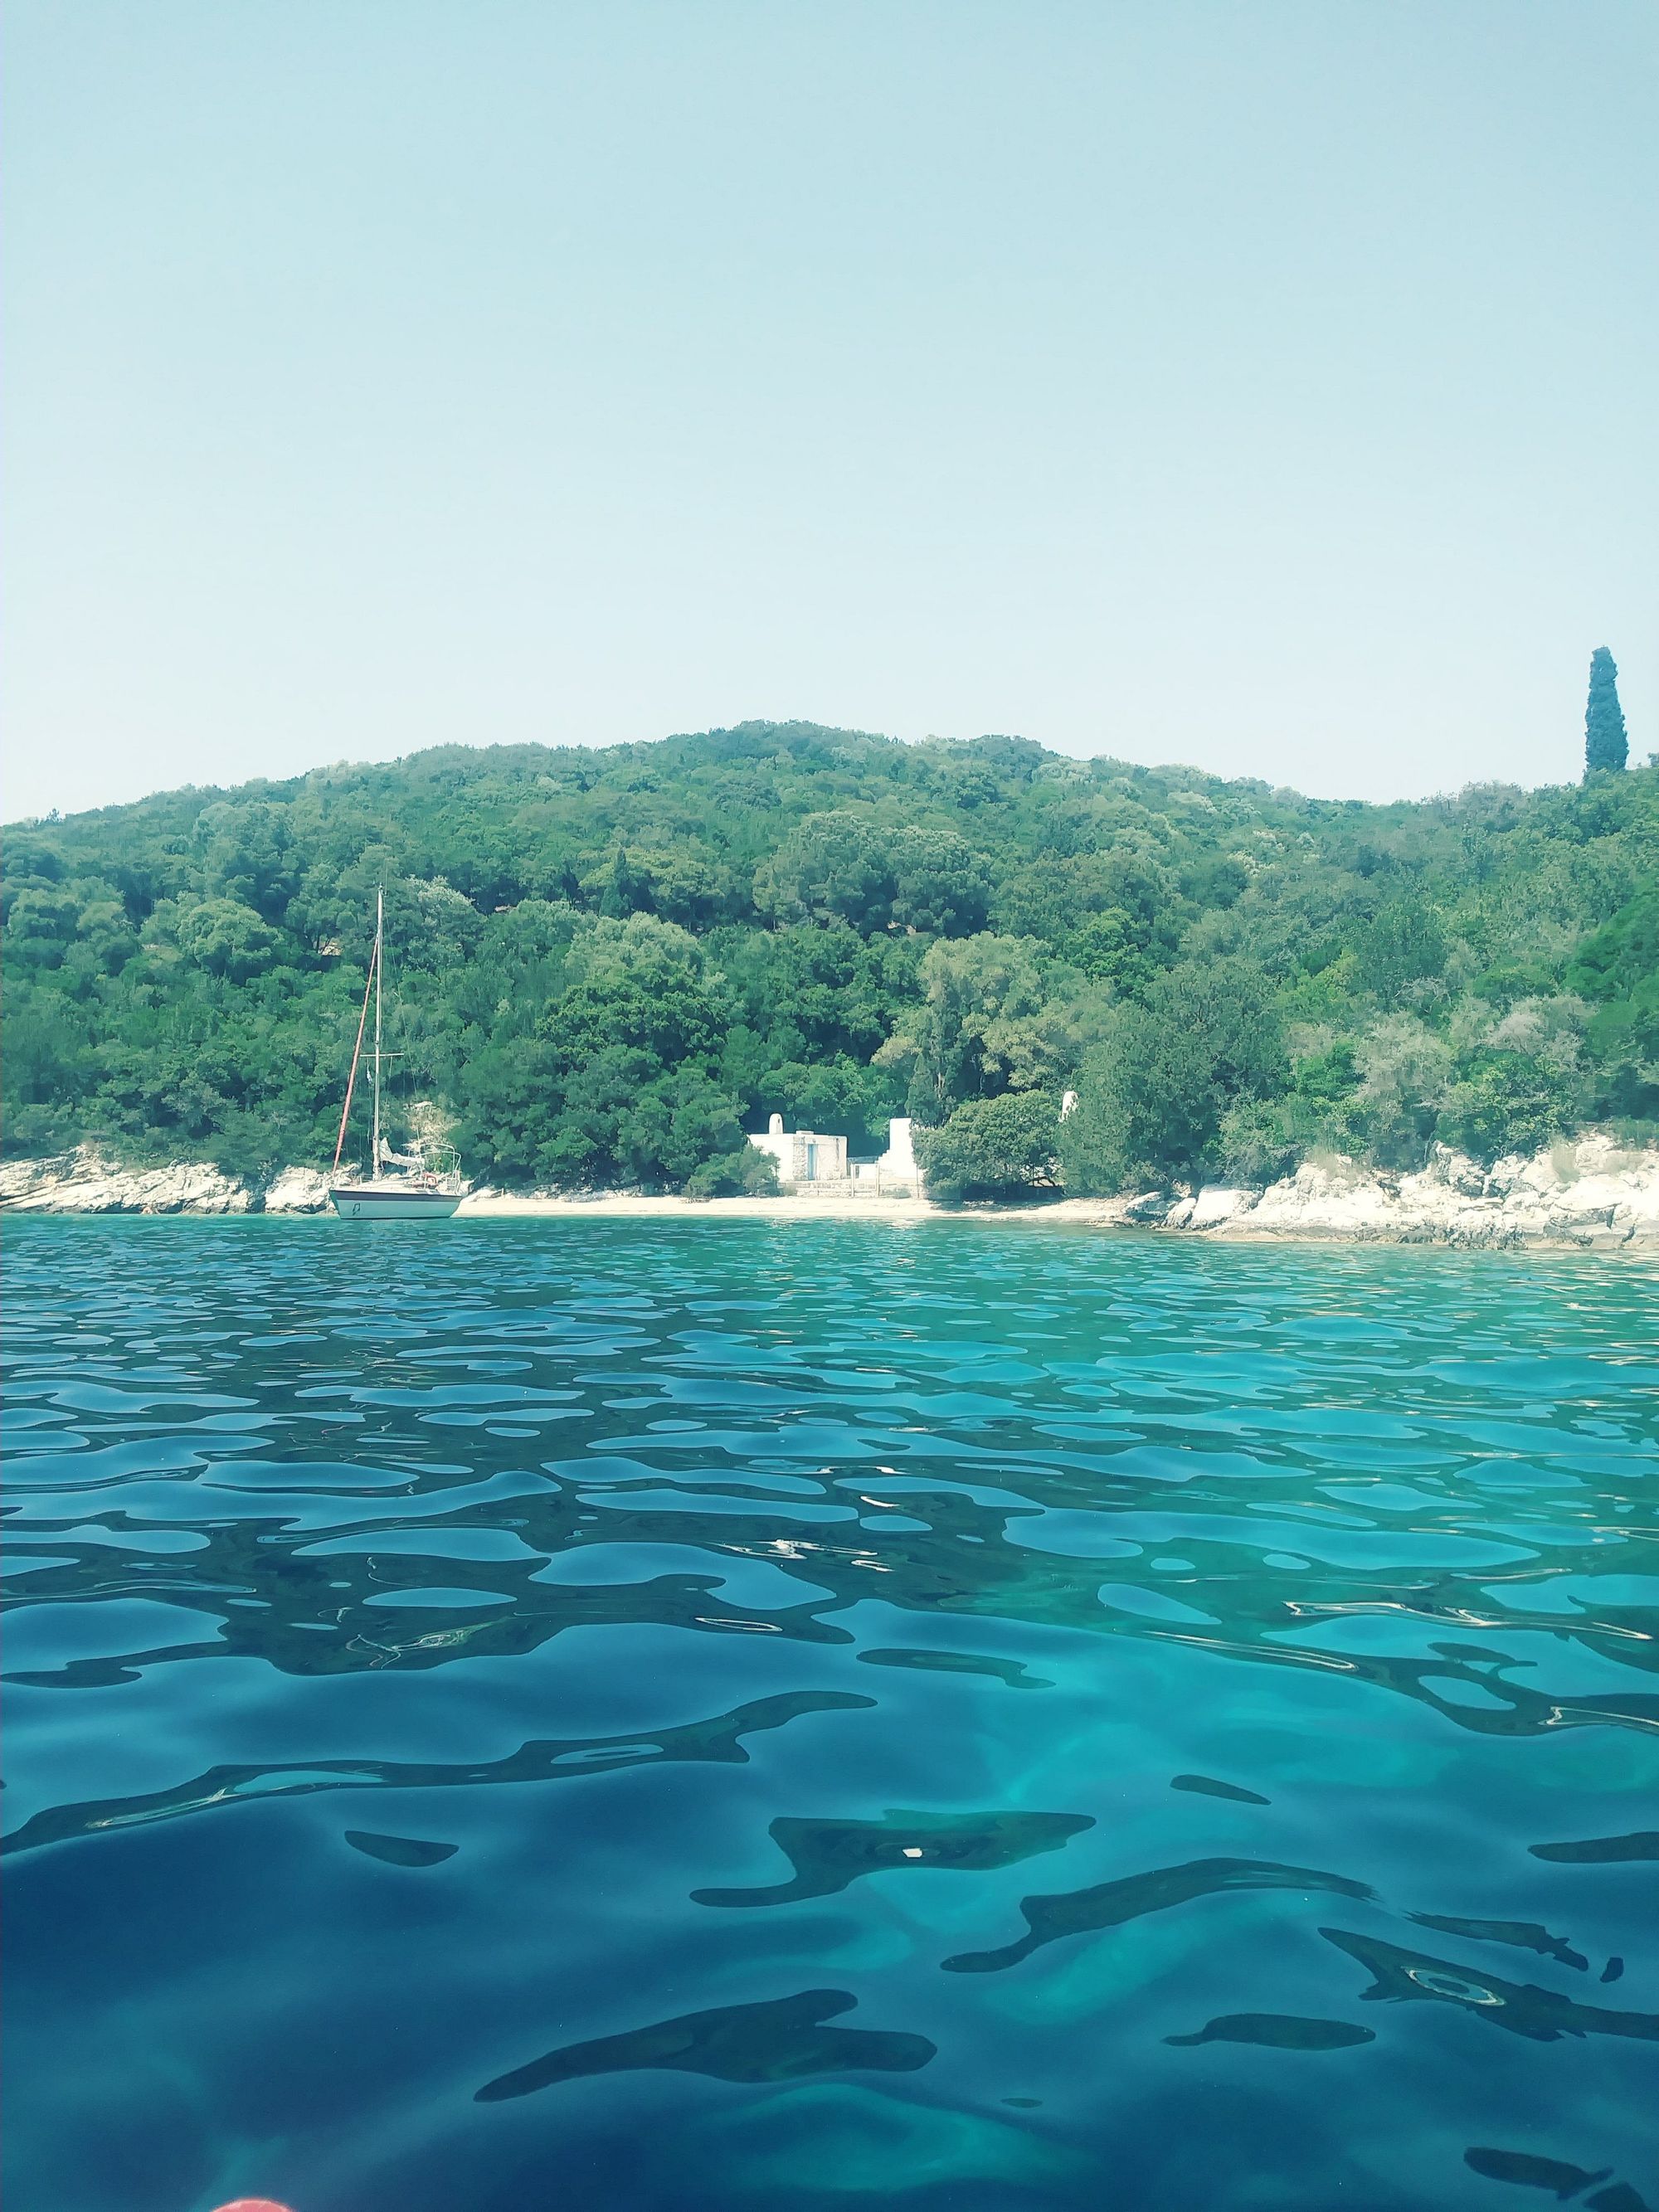 A small island of the coast in Greece.